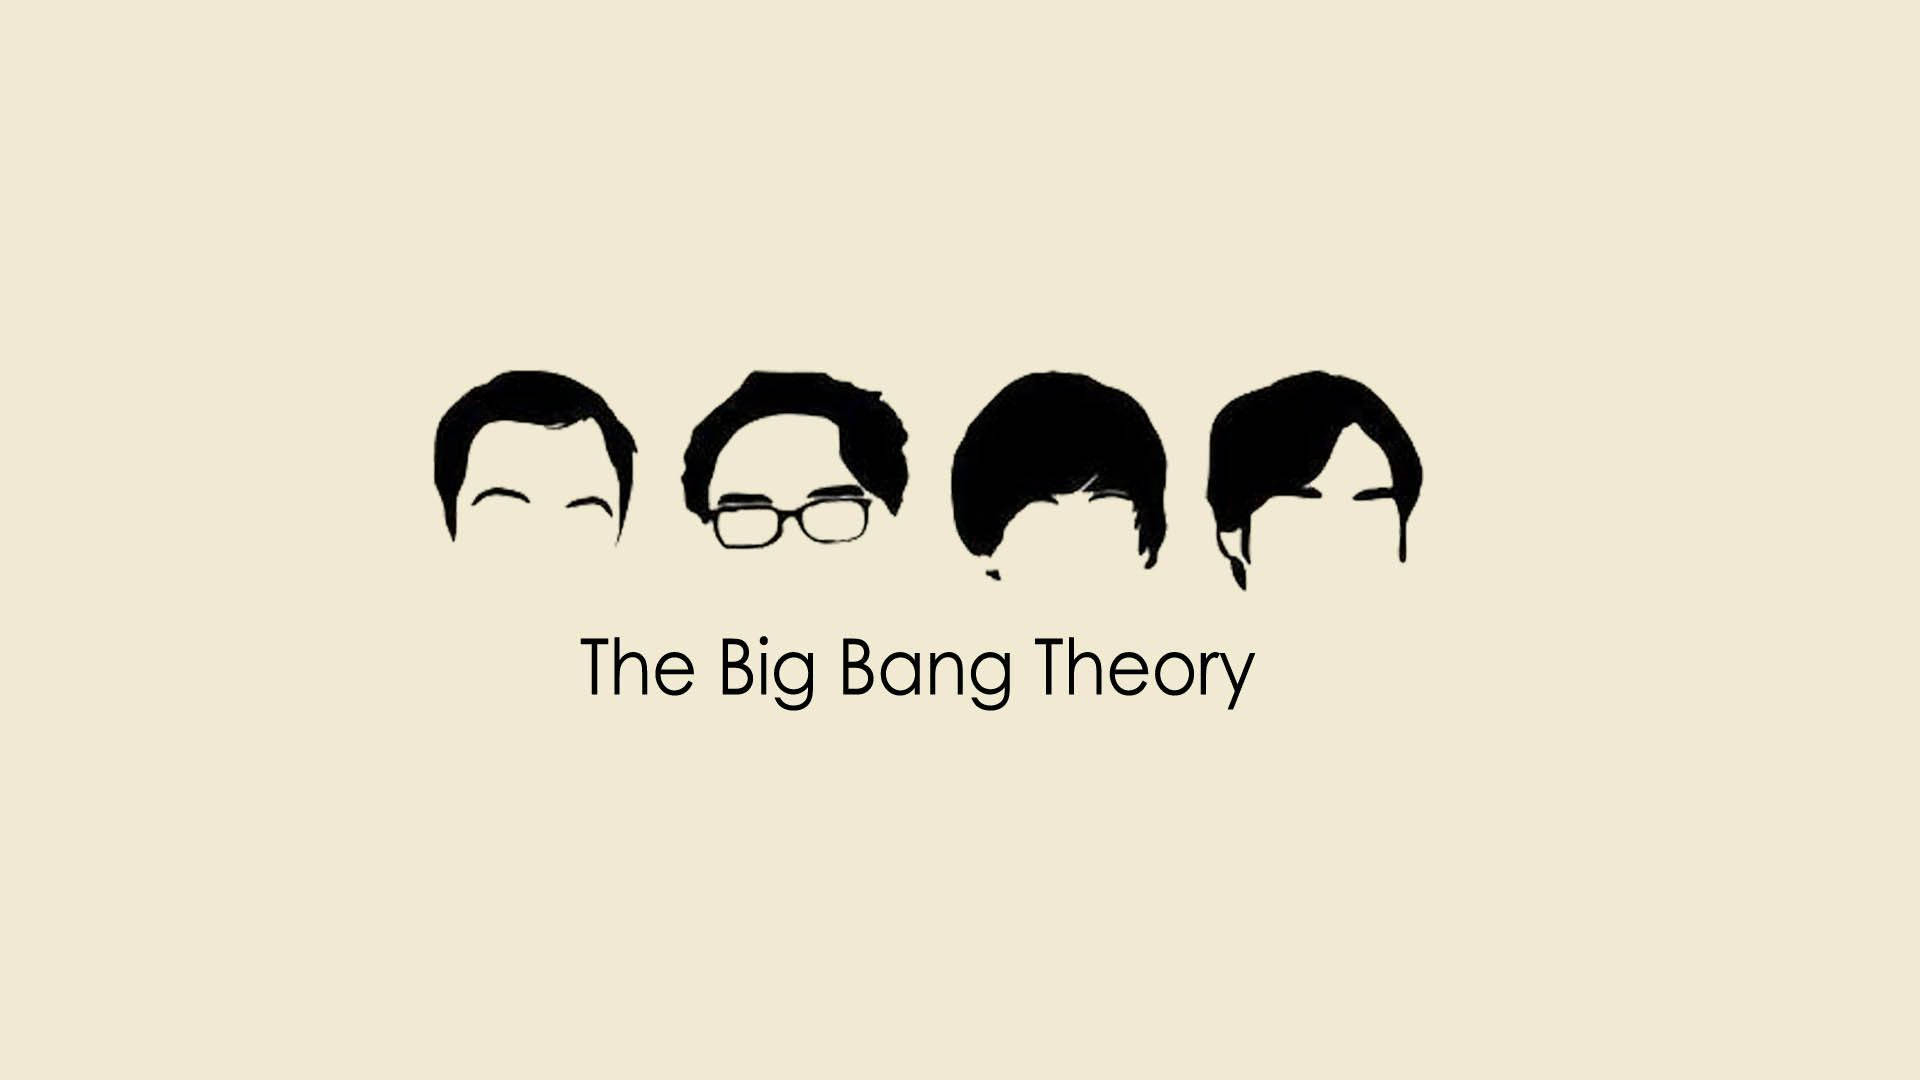 1920x1080 Download The Big Bang Theory Minimalist Illustration Wallpaper | Wallpapers .com